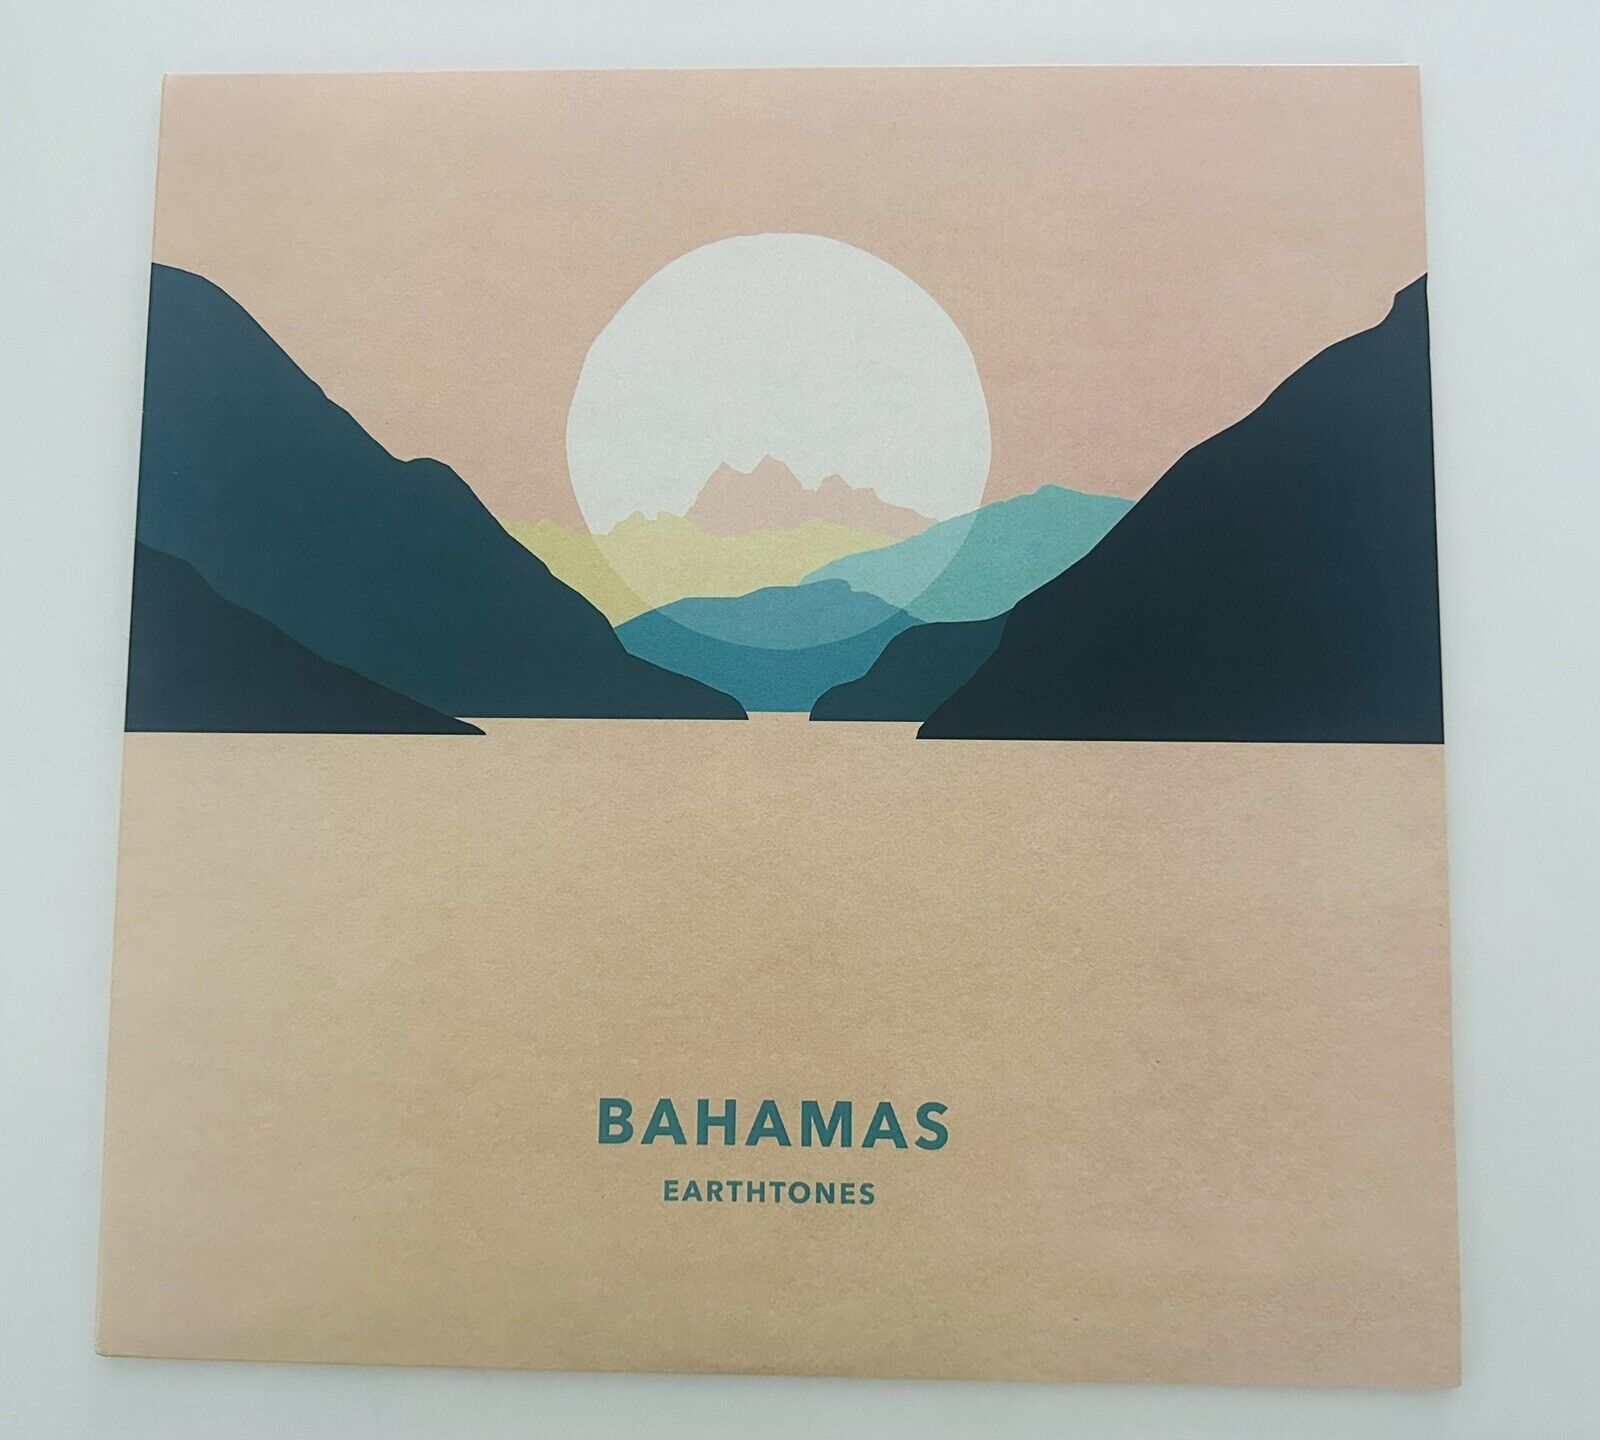 Bahamas - Earthtones  Limited Numbered Vinyl LP Tan Number 36/100